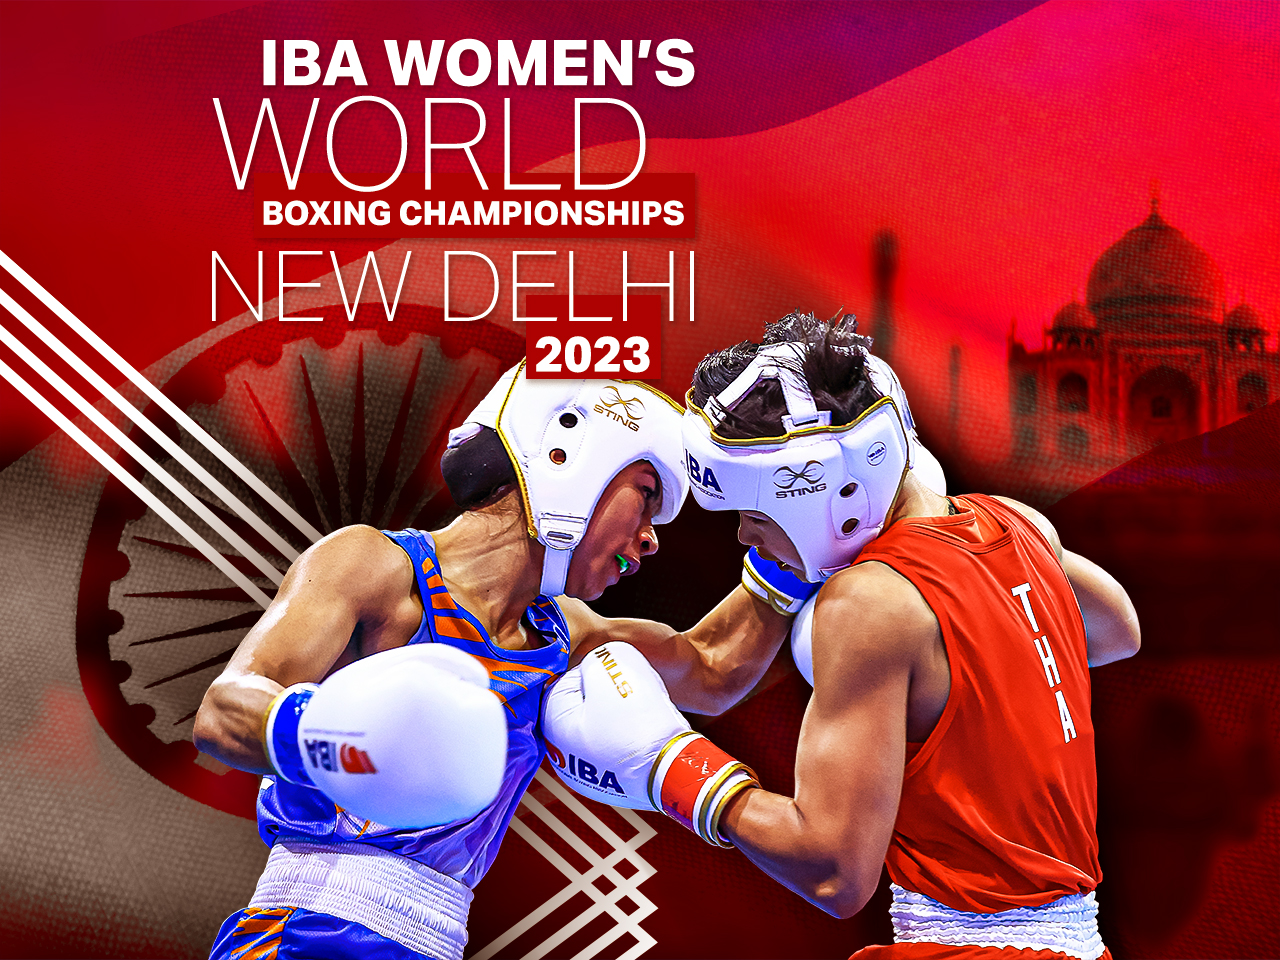 IBA Women’s World Boxing Championships New Delhi 2023 IBA